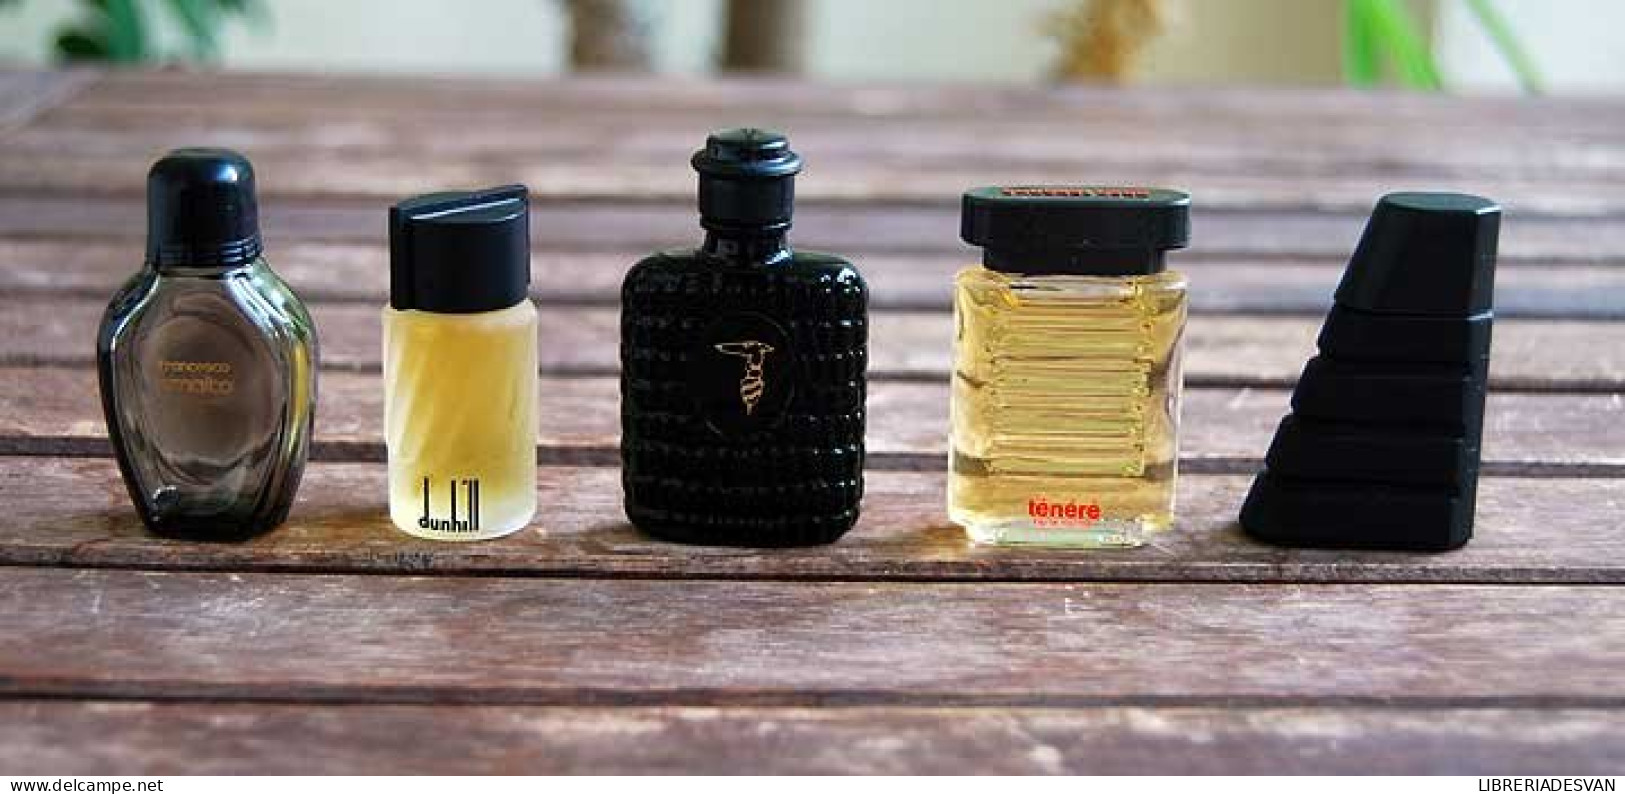 Estuche Con 5 Perfumes Miniatura ALW. Francesco Smalto, Dunhill, Trussardi, Ténéré By Paco Rabanne Y Lorenzo - Unclassified